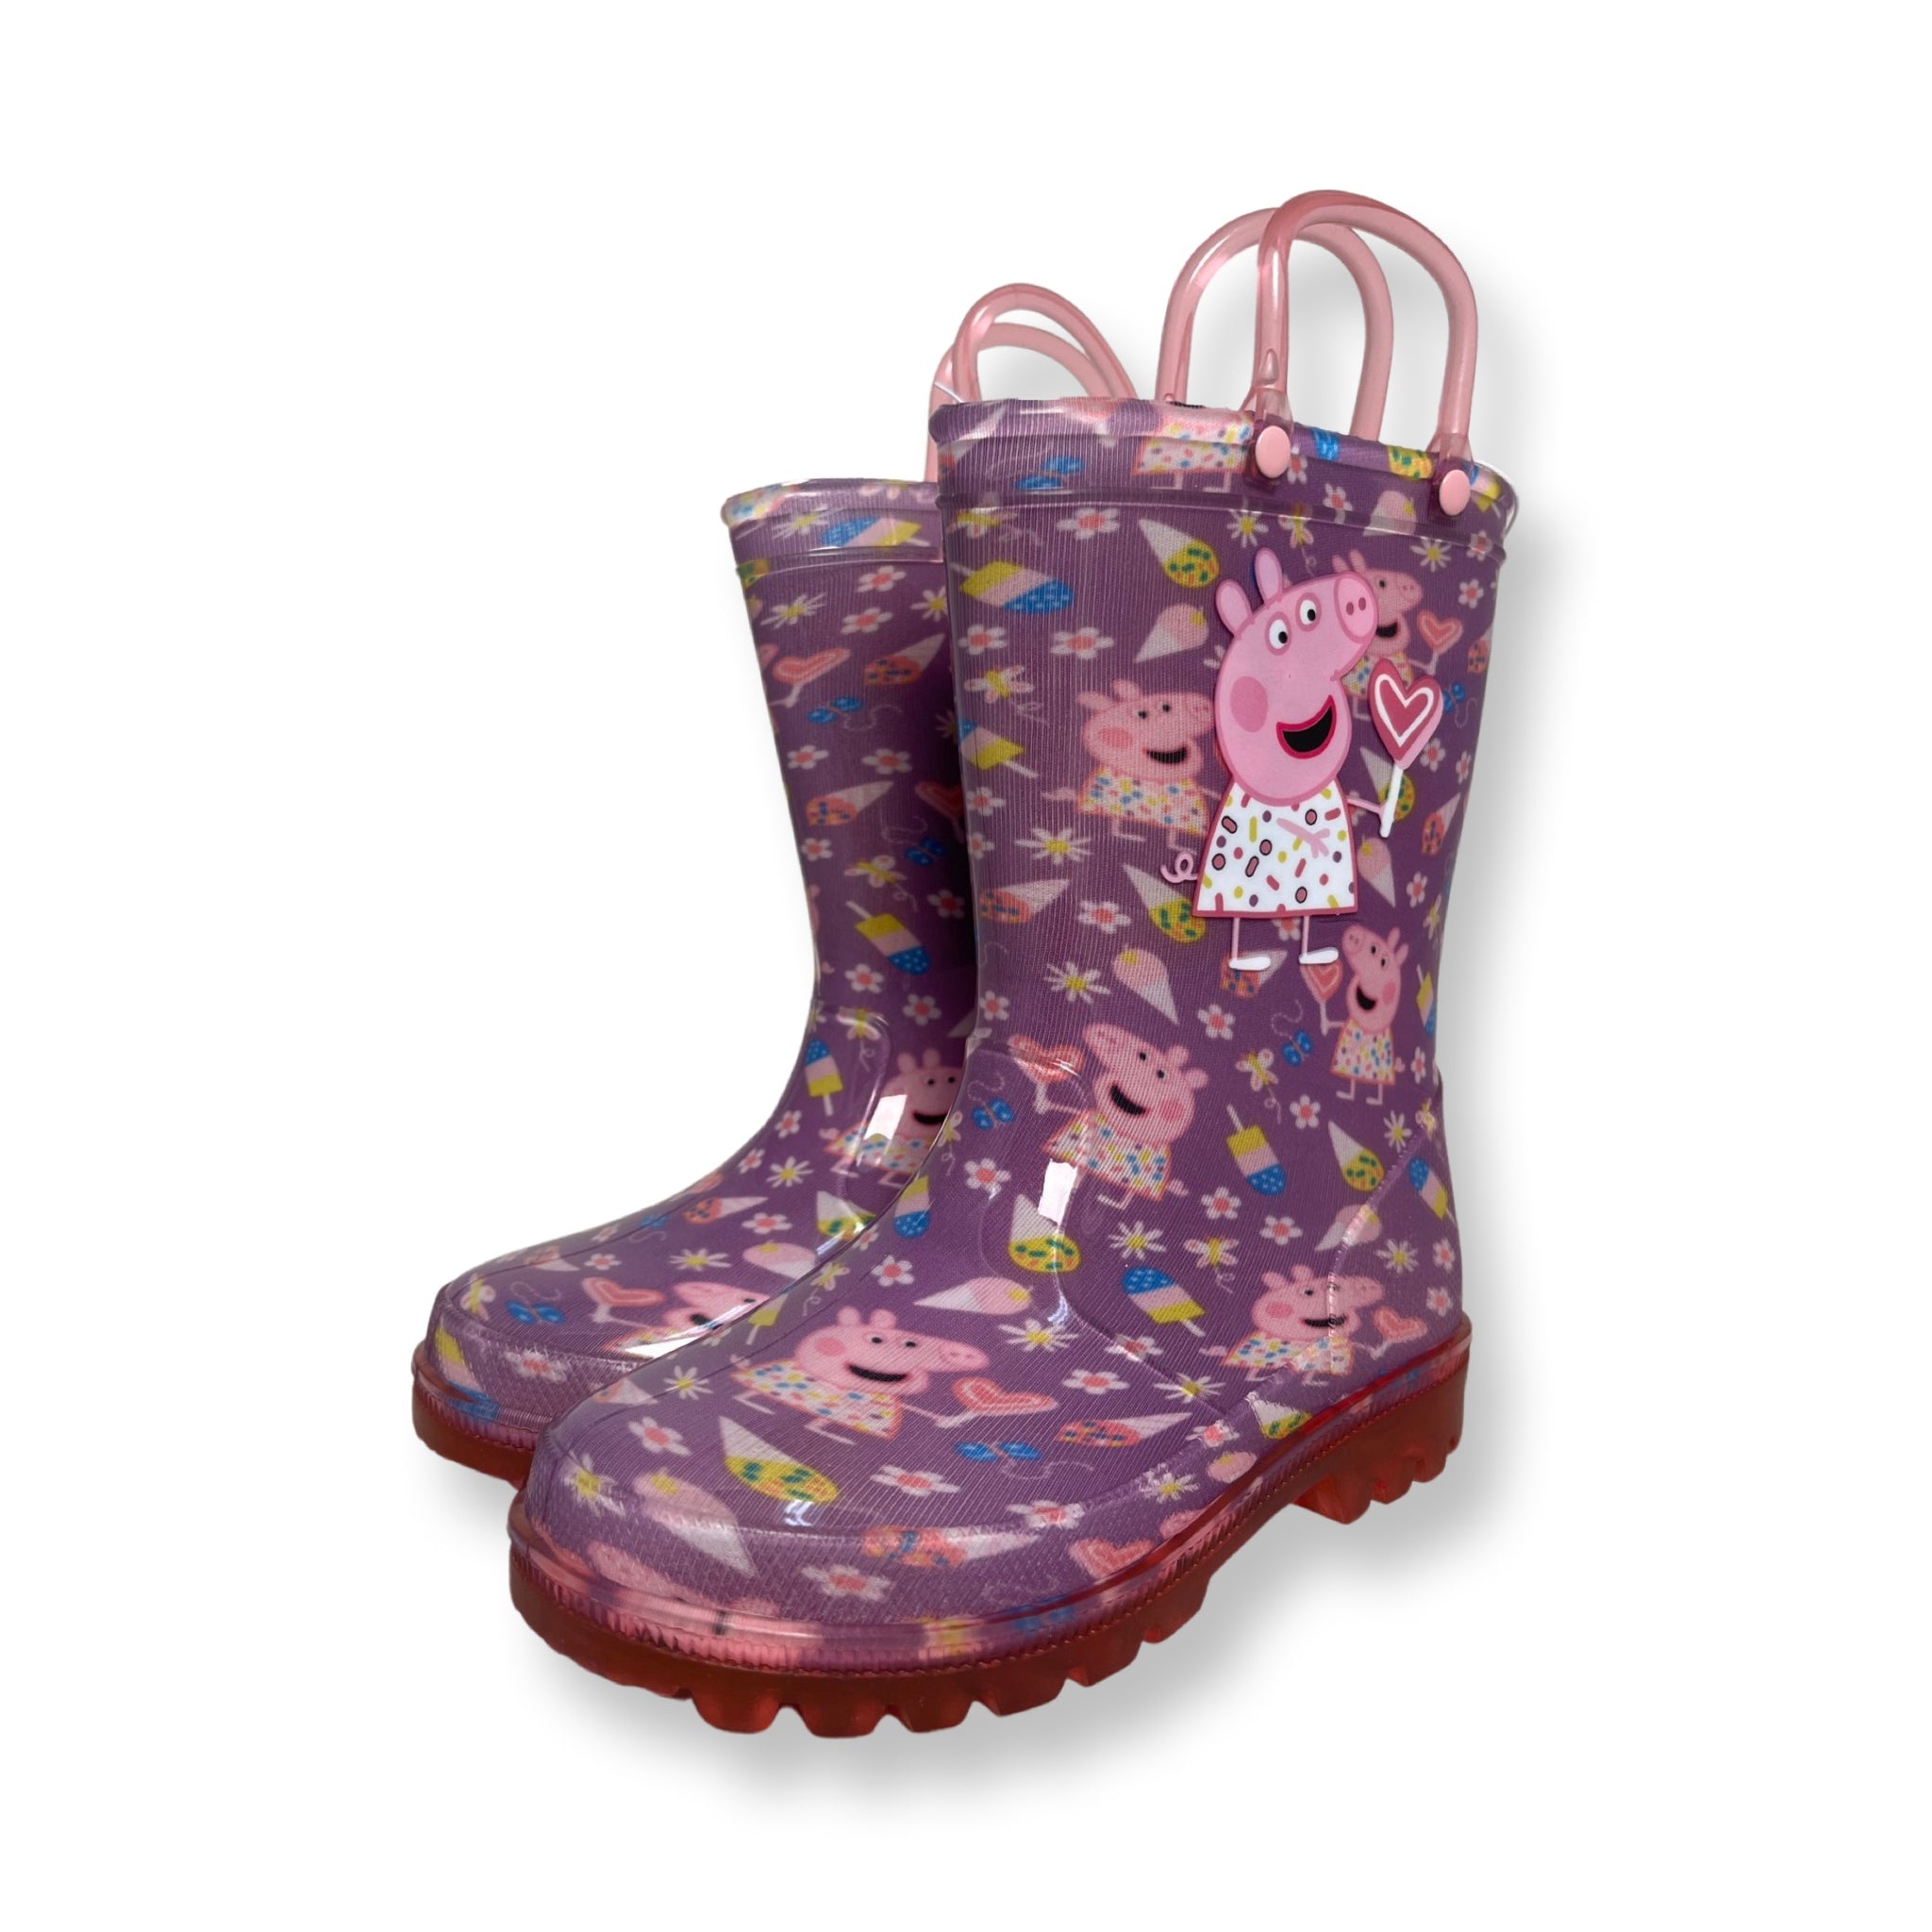 Peppa Pig Light-Up Rain Boots - Purple